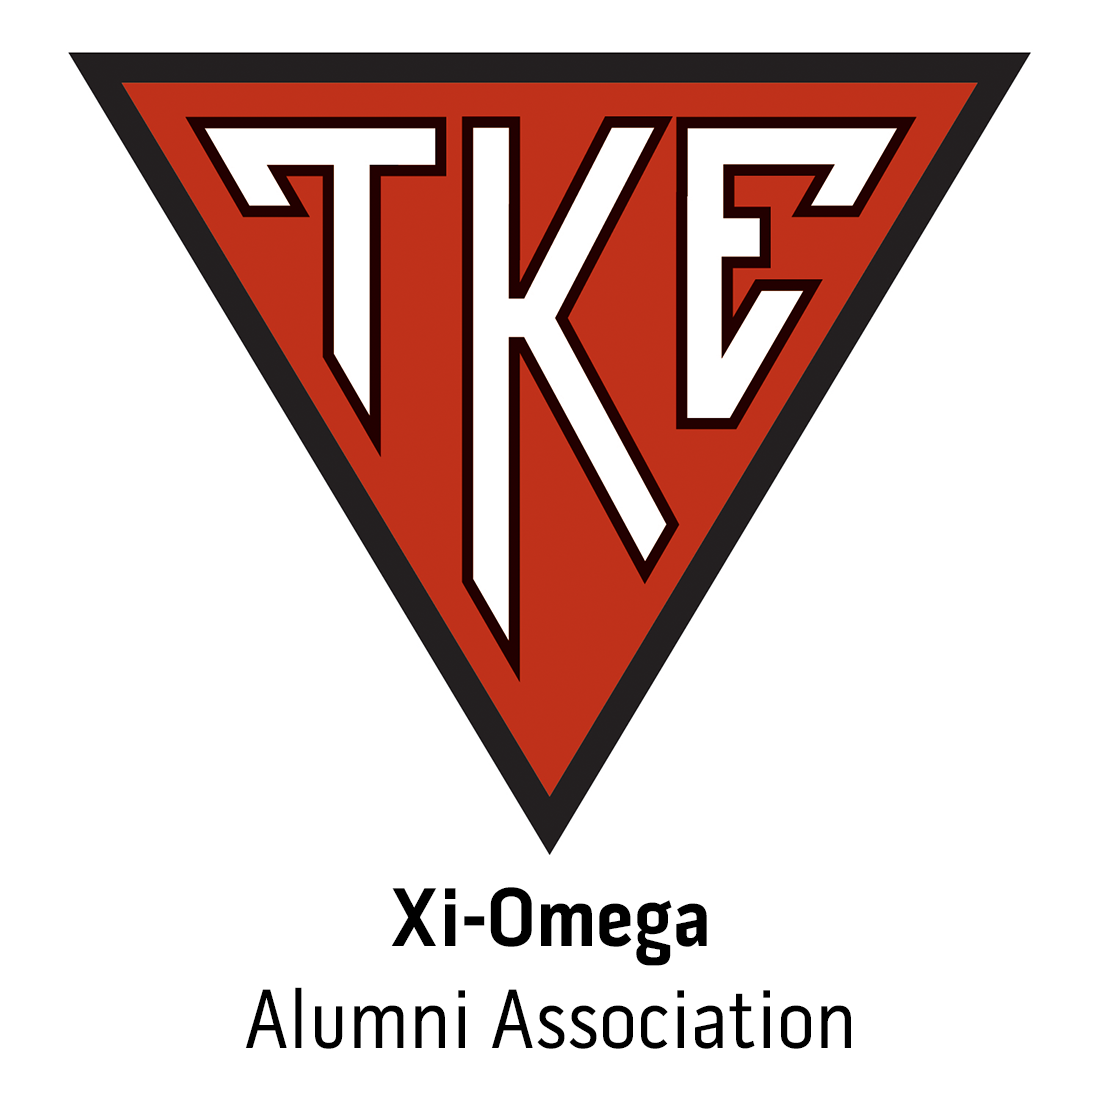 Xi-Omega Alumni Association for Virginia Polytechnic Institute